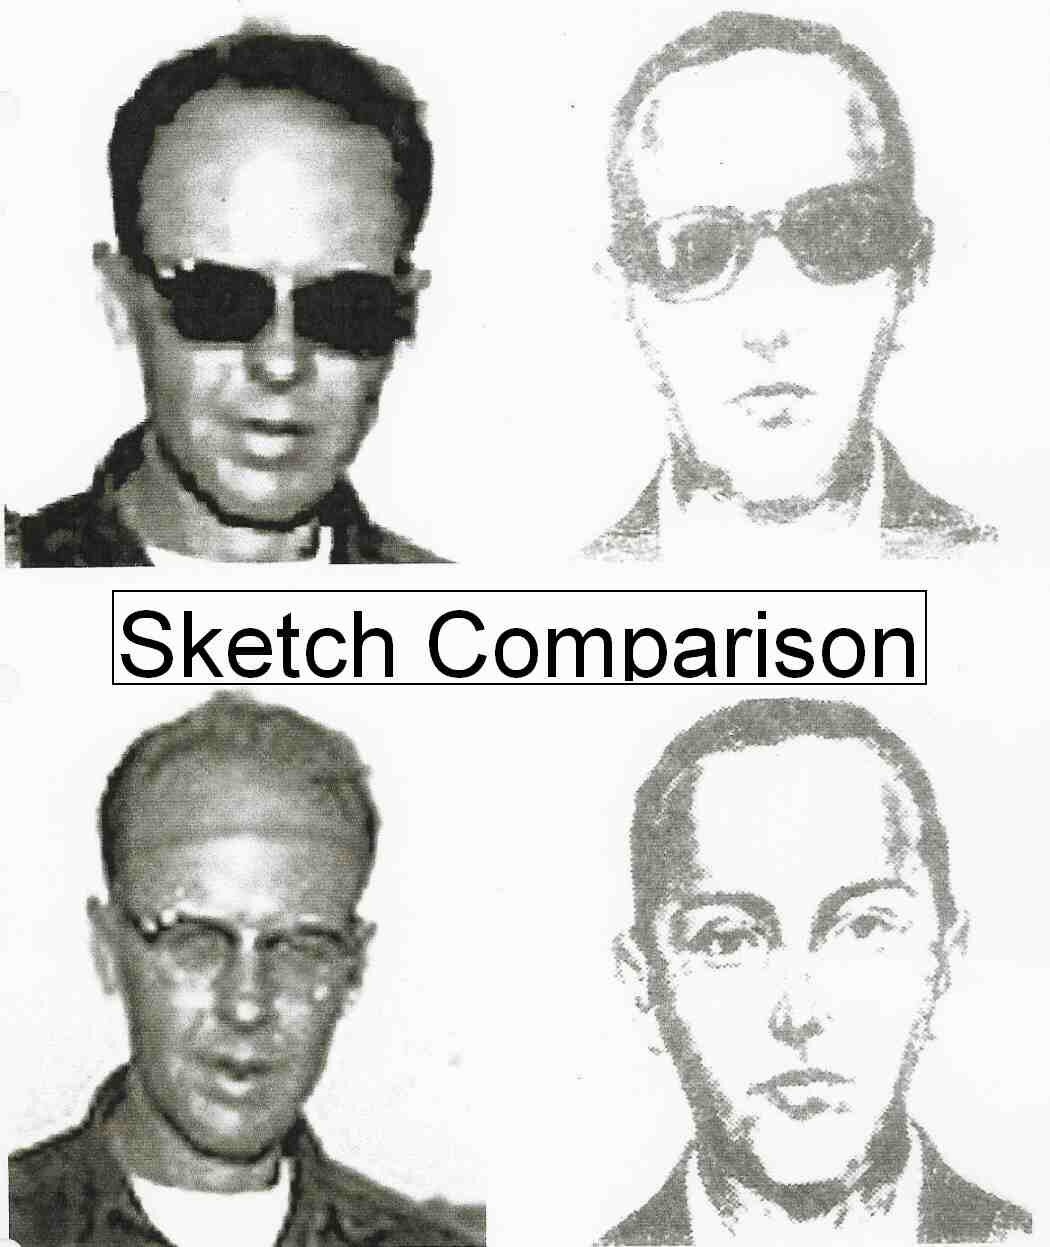  Barbara Dayton’s comparison to FBI composite sketches when formerly identified as Robert Dayton 